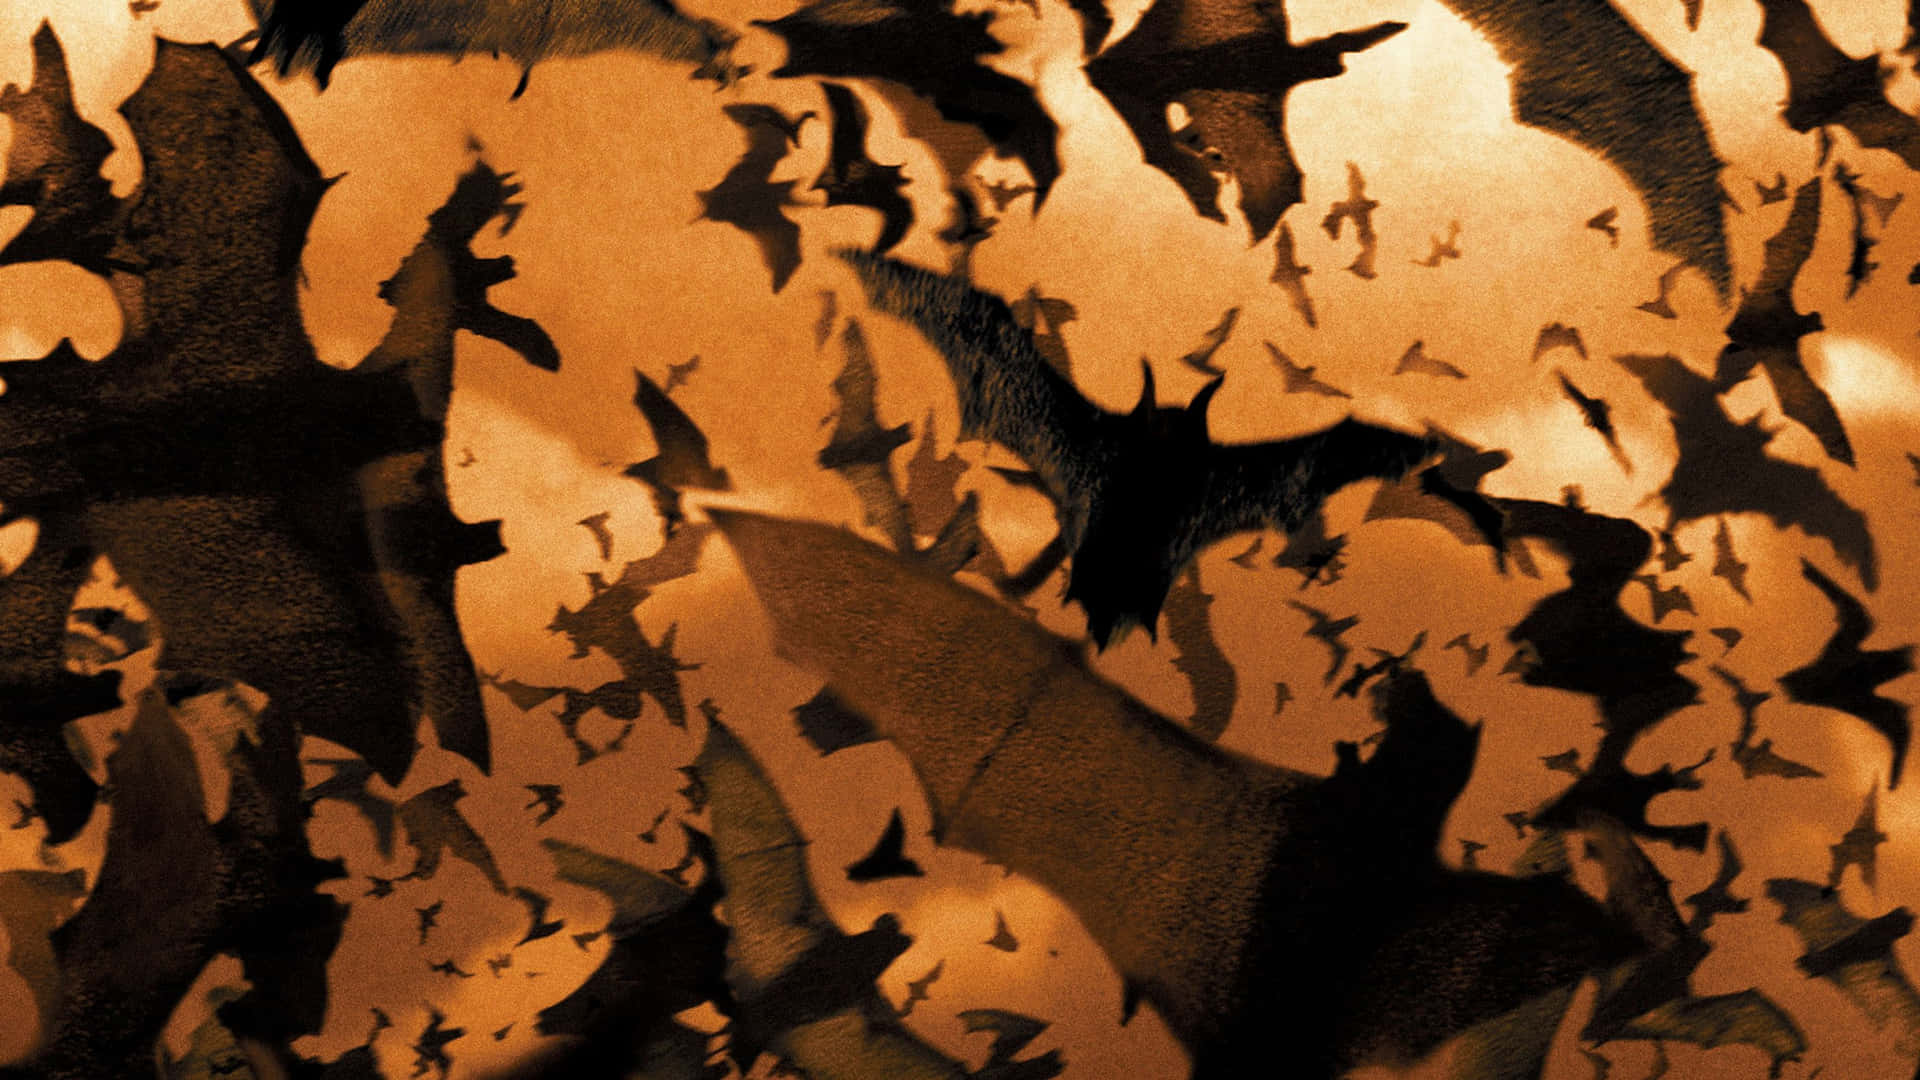 Christian Bale as Batman overlooking the city of Gotham in Batman Begins Wallpaper